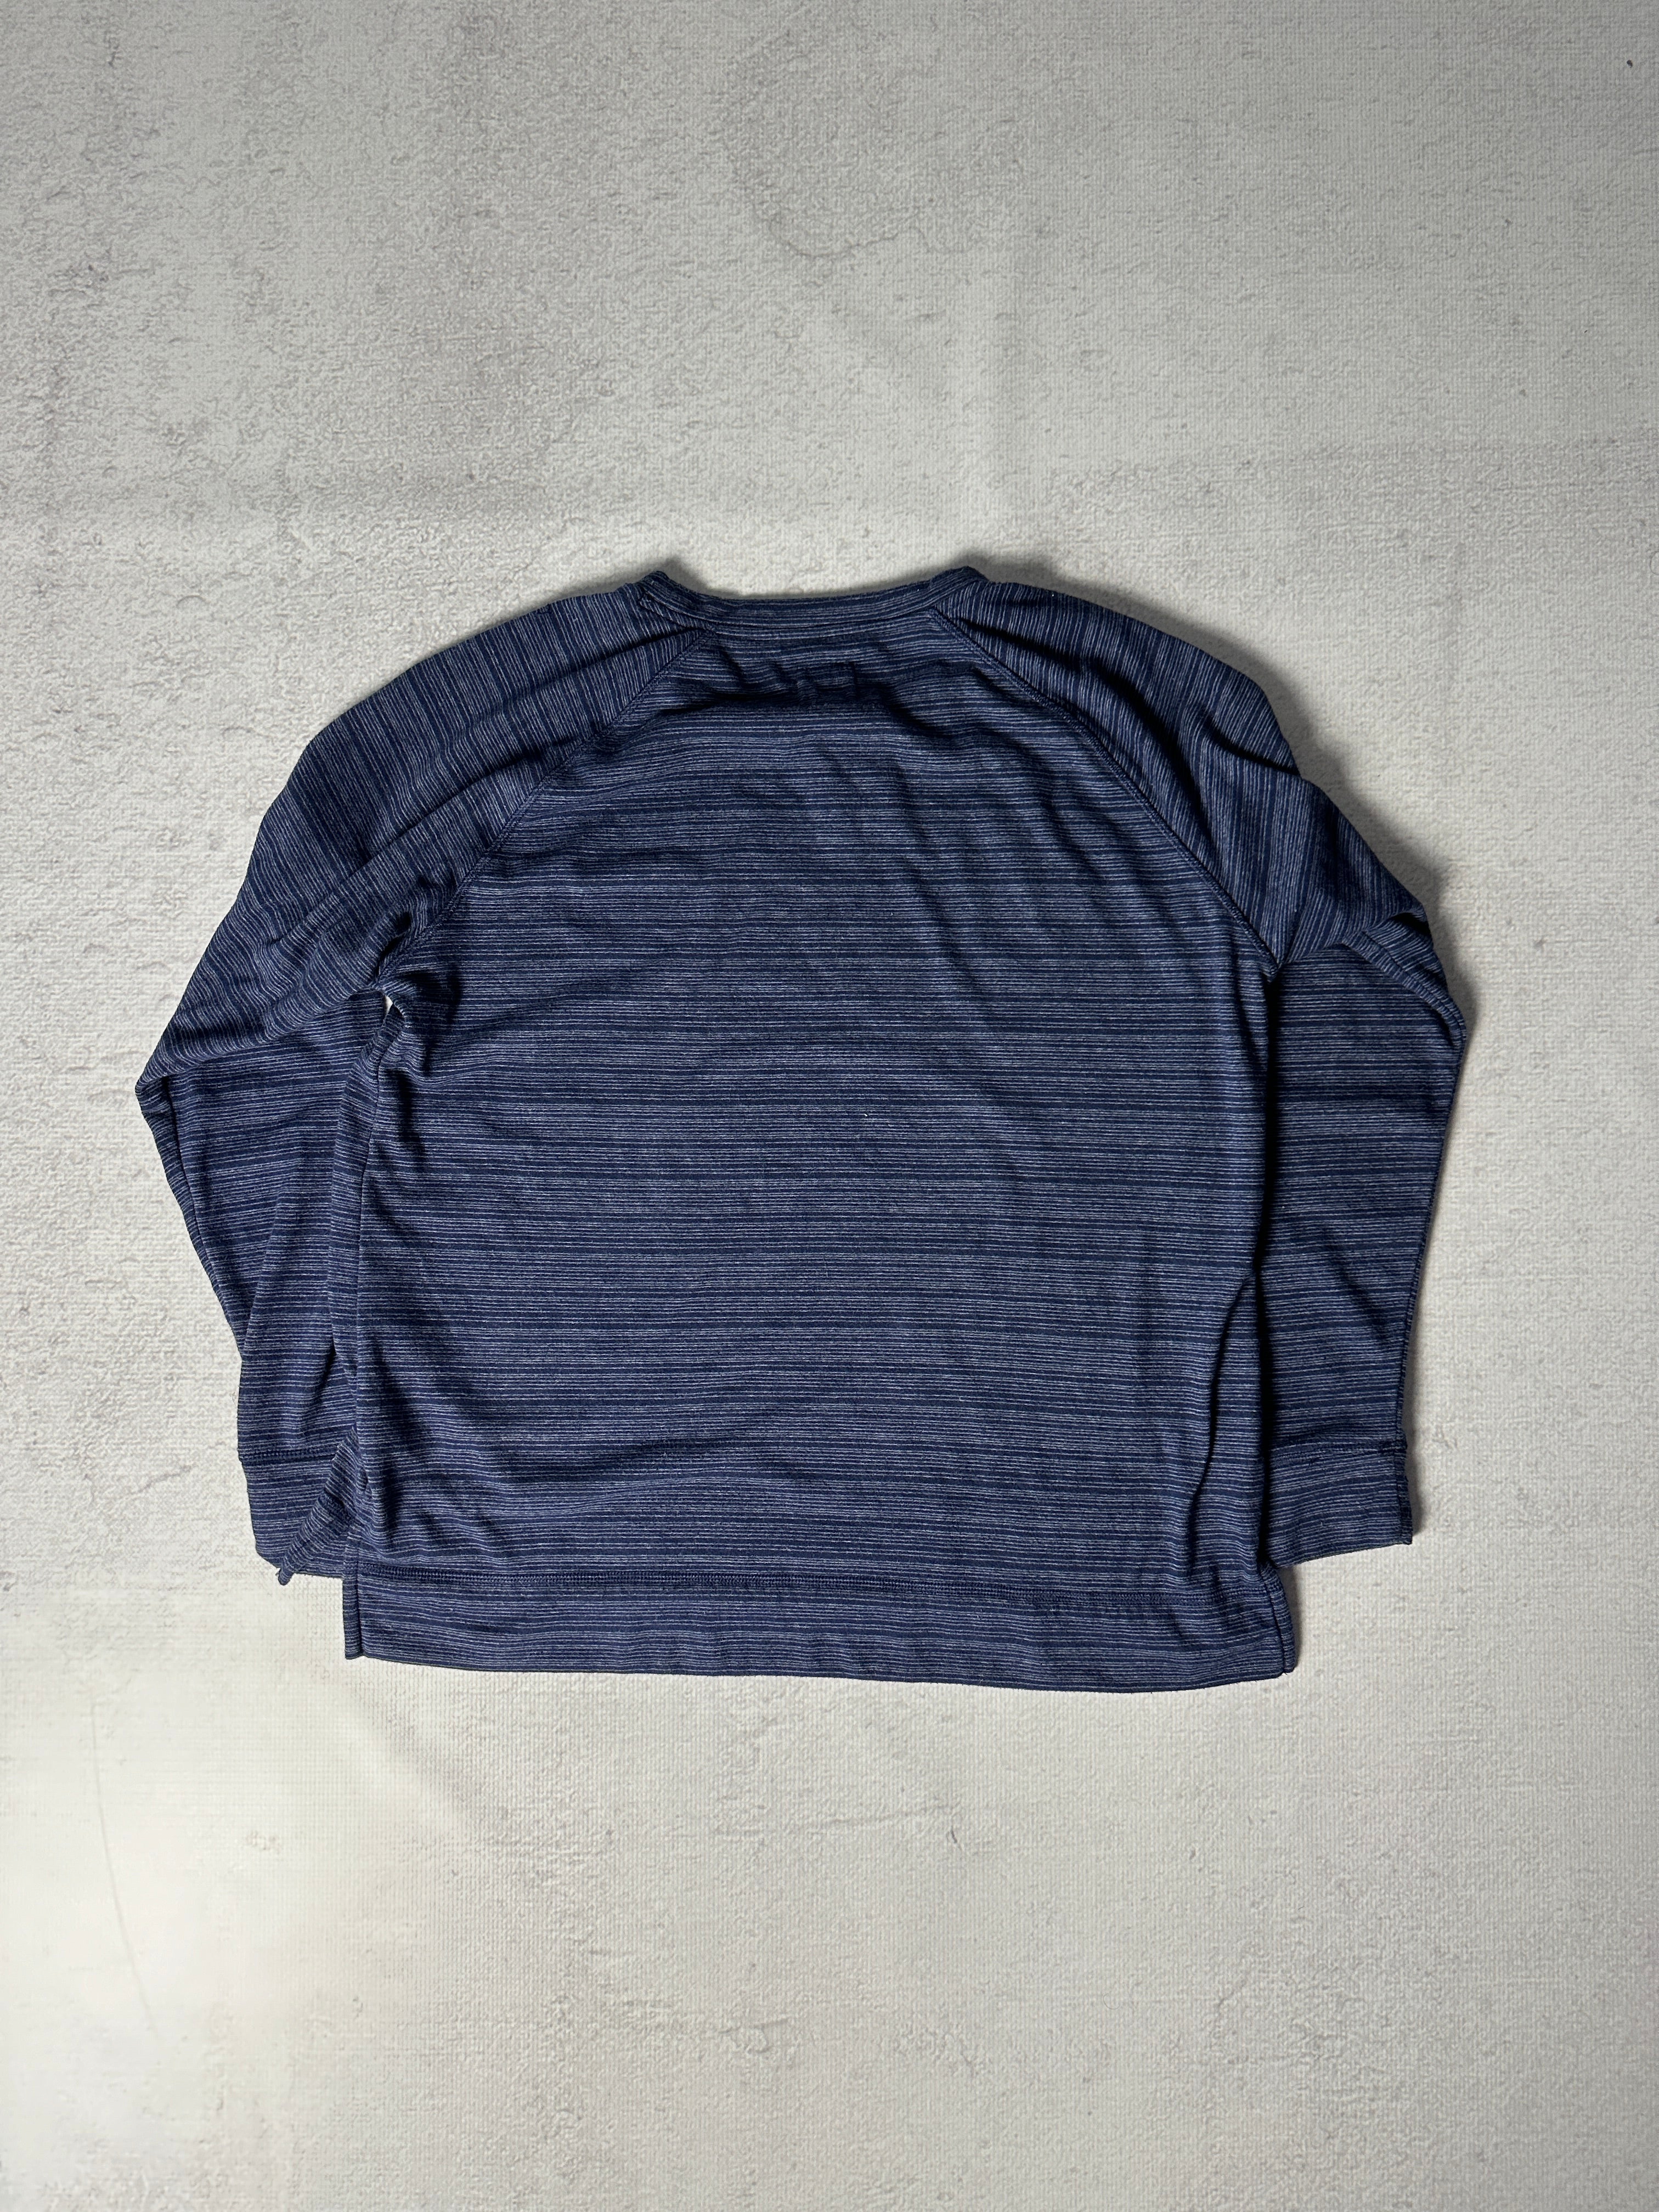 Vintage Champion Long-Sleeve T-Shirt - Men's XL